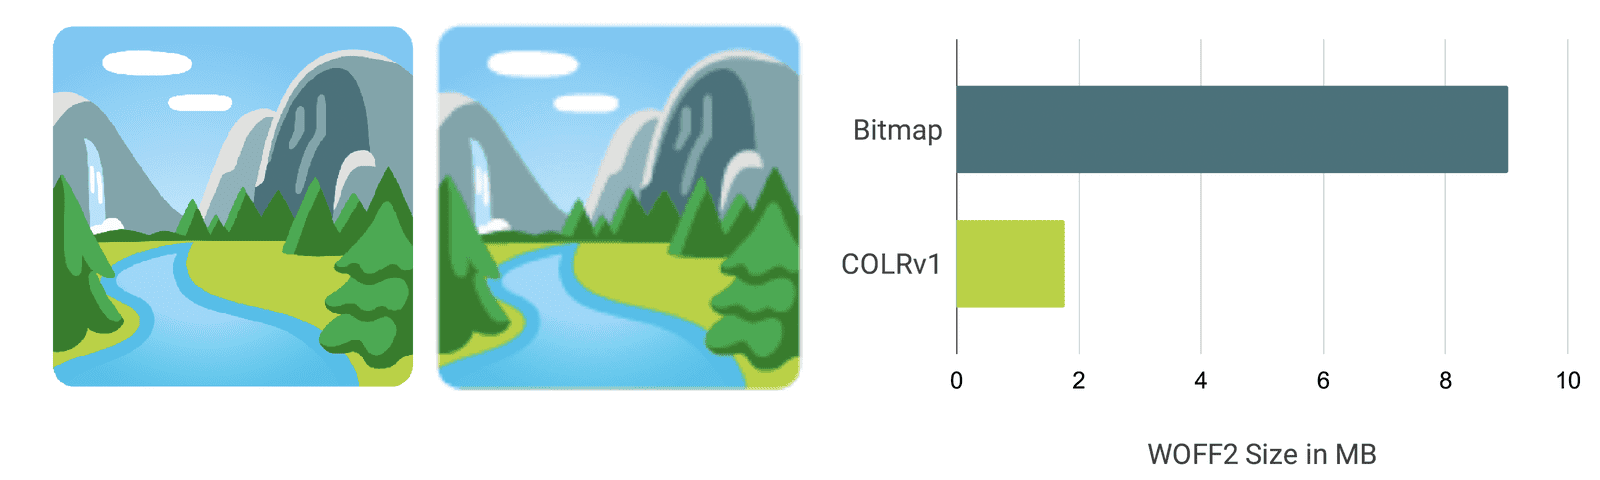 COLRv1 フォントの鮮明さと小ささを示す比較可視化と棒グラフ。